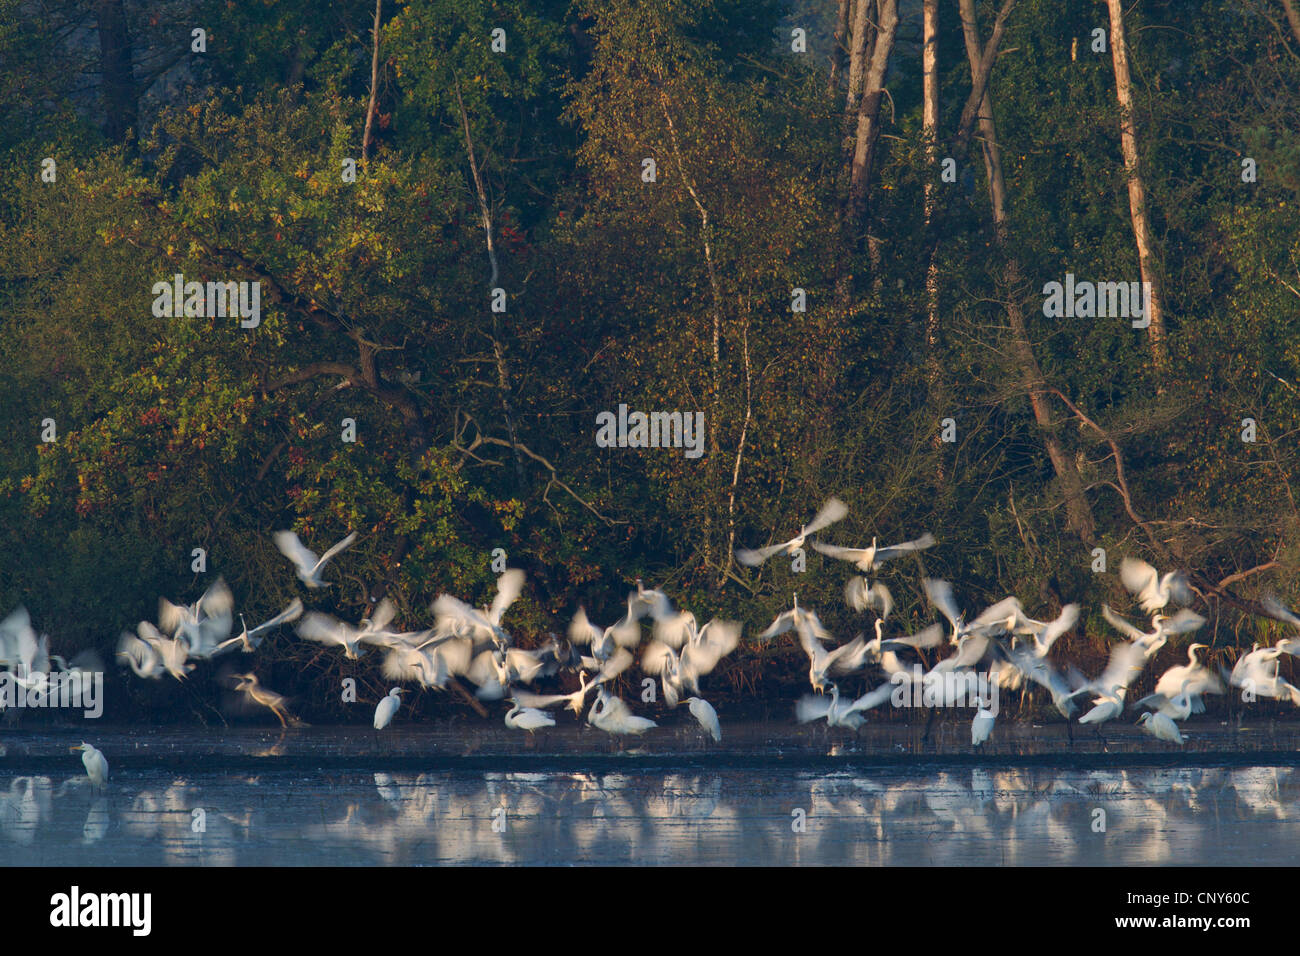 great egret, Great White Egret (Egretta alba, Casmerodius albus, Ardea alba), great egrets and grey herons flying up at a lake shore, Germany, Saxony, Biosphaerenreservat Oberlausitzer Heide-und Teichlandschaft Stock Photo